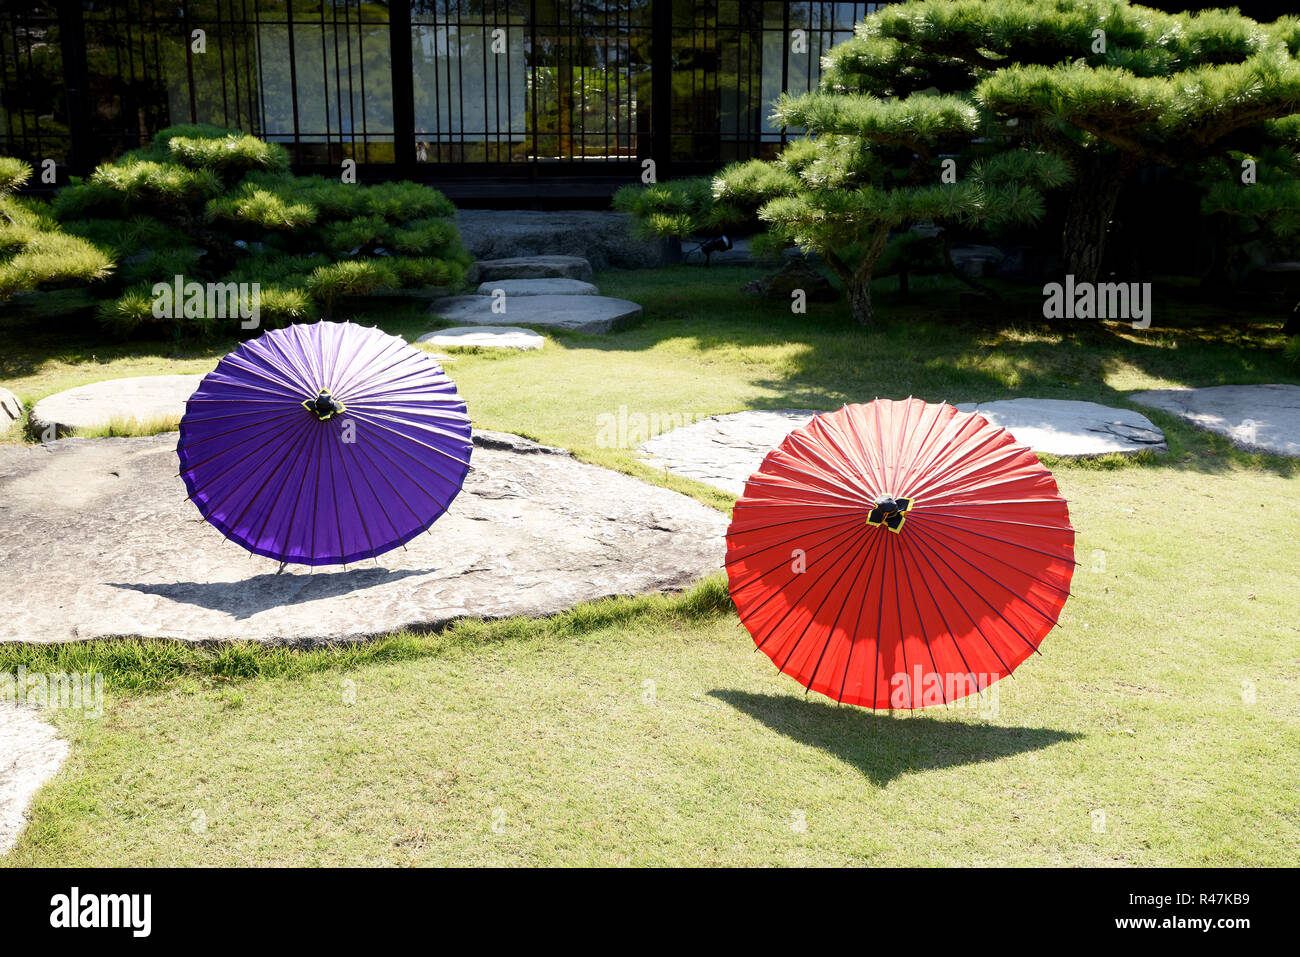 Japanese garden with traditional Japanese umbrella Stock Photo